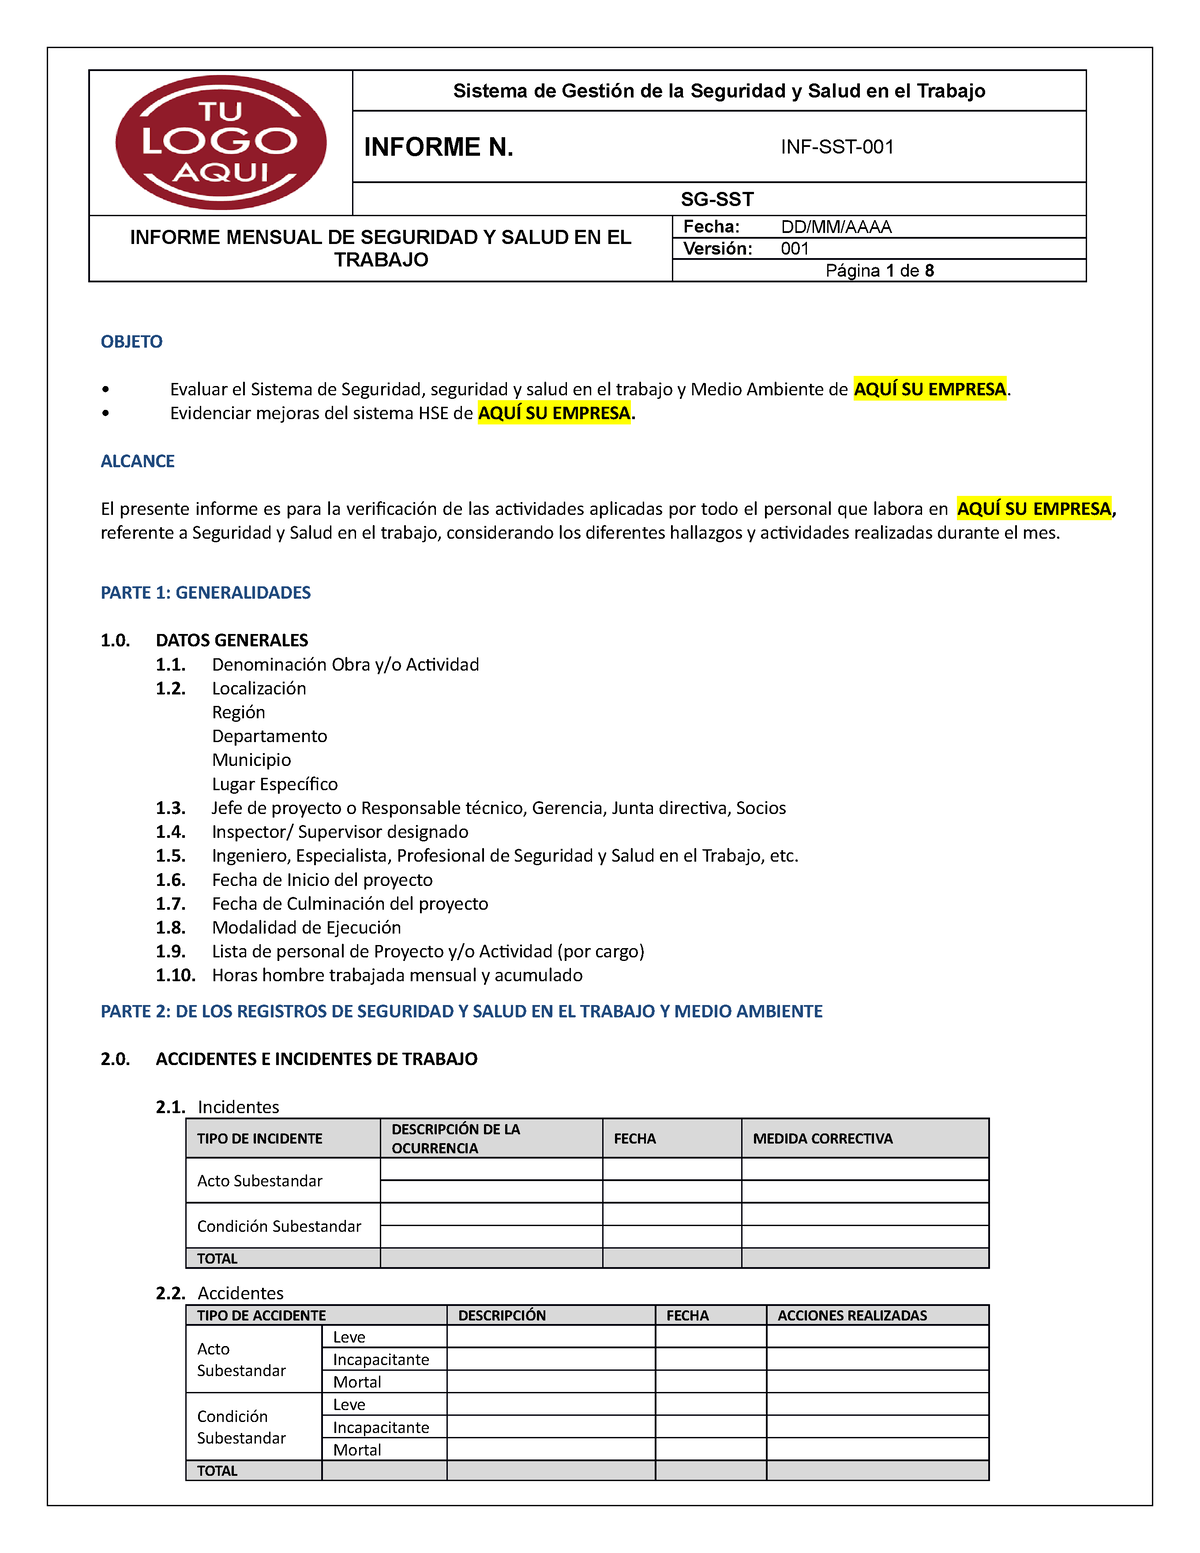 Formato Informe Mensual SST - INFORME N. INF-SST- SG-SST INFORME MENSUAL DE  SEGURIDAD Y SALUD EN EL - Studocu